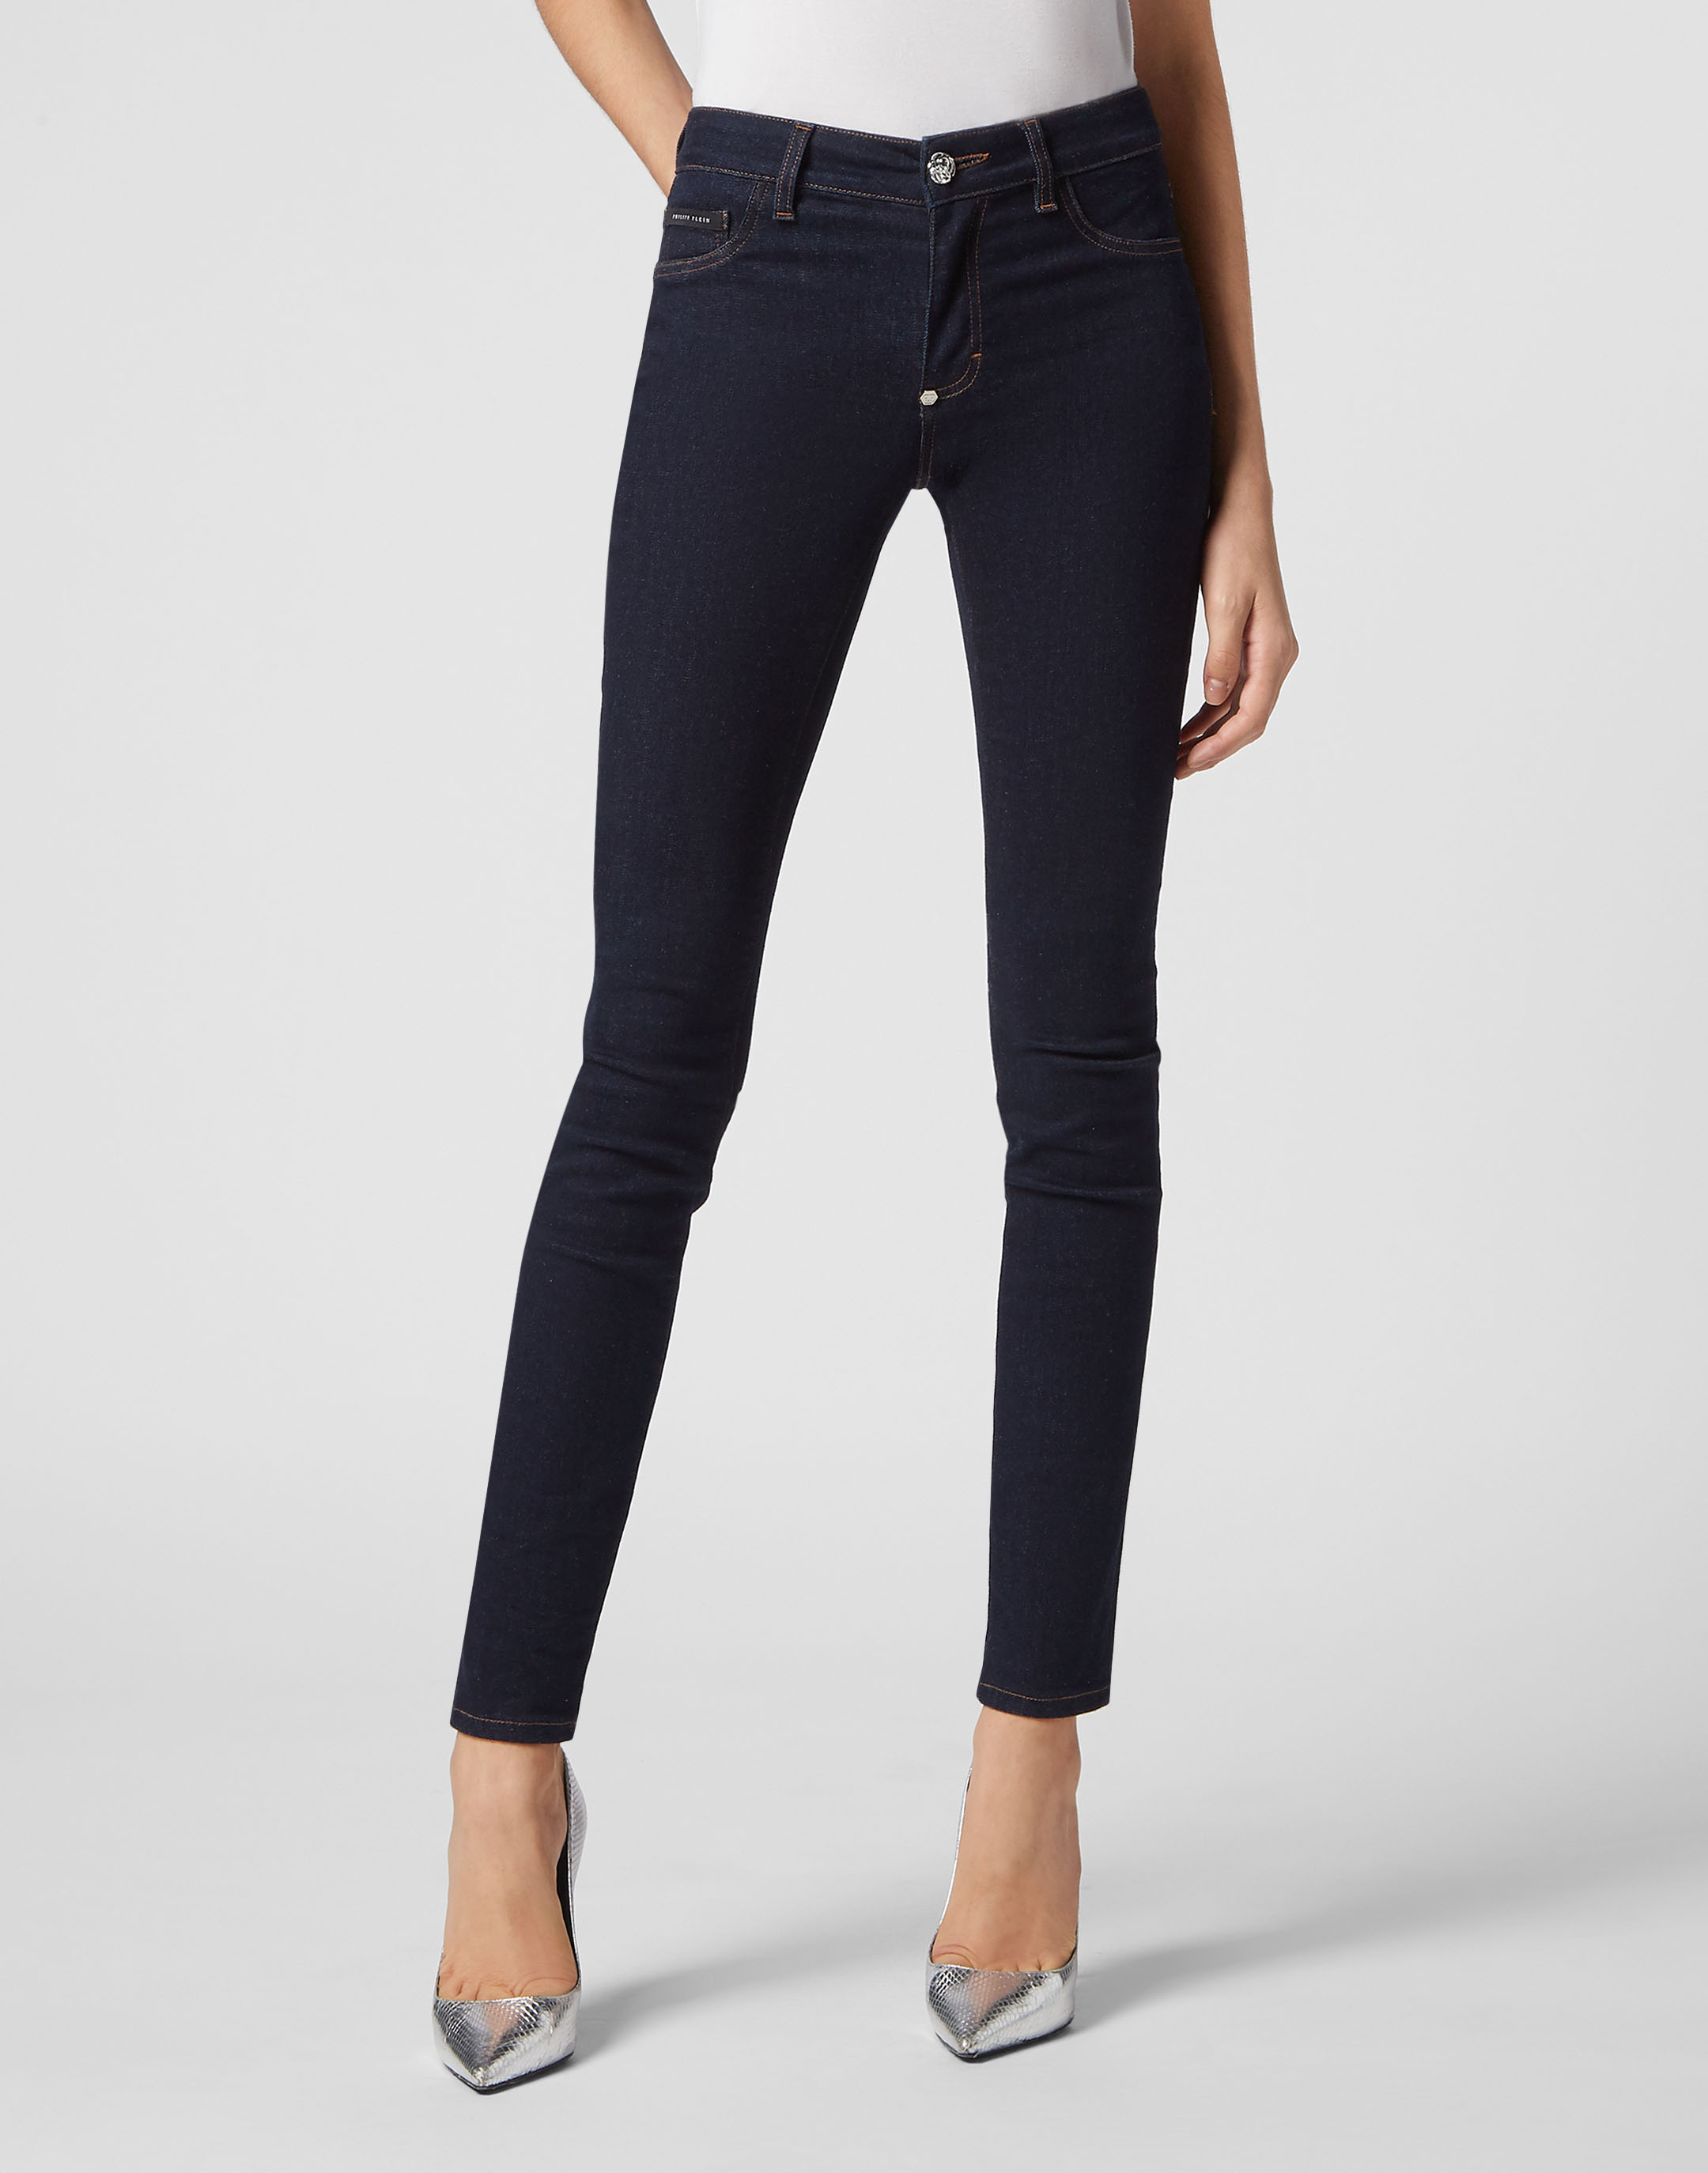 Women's Solid Casual Lightweight Stretchy Comfort Pocket Jean Jegging Pants  S-3XL - Walmart.com